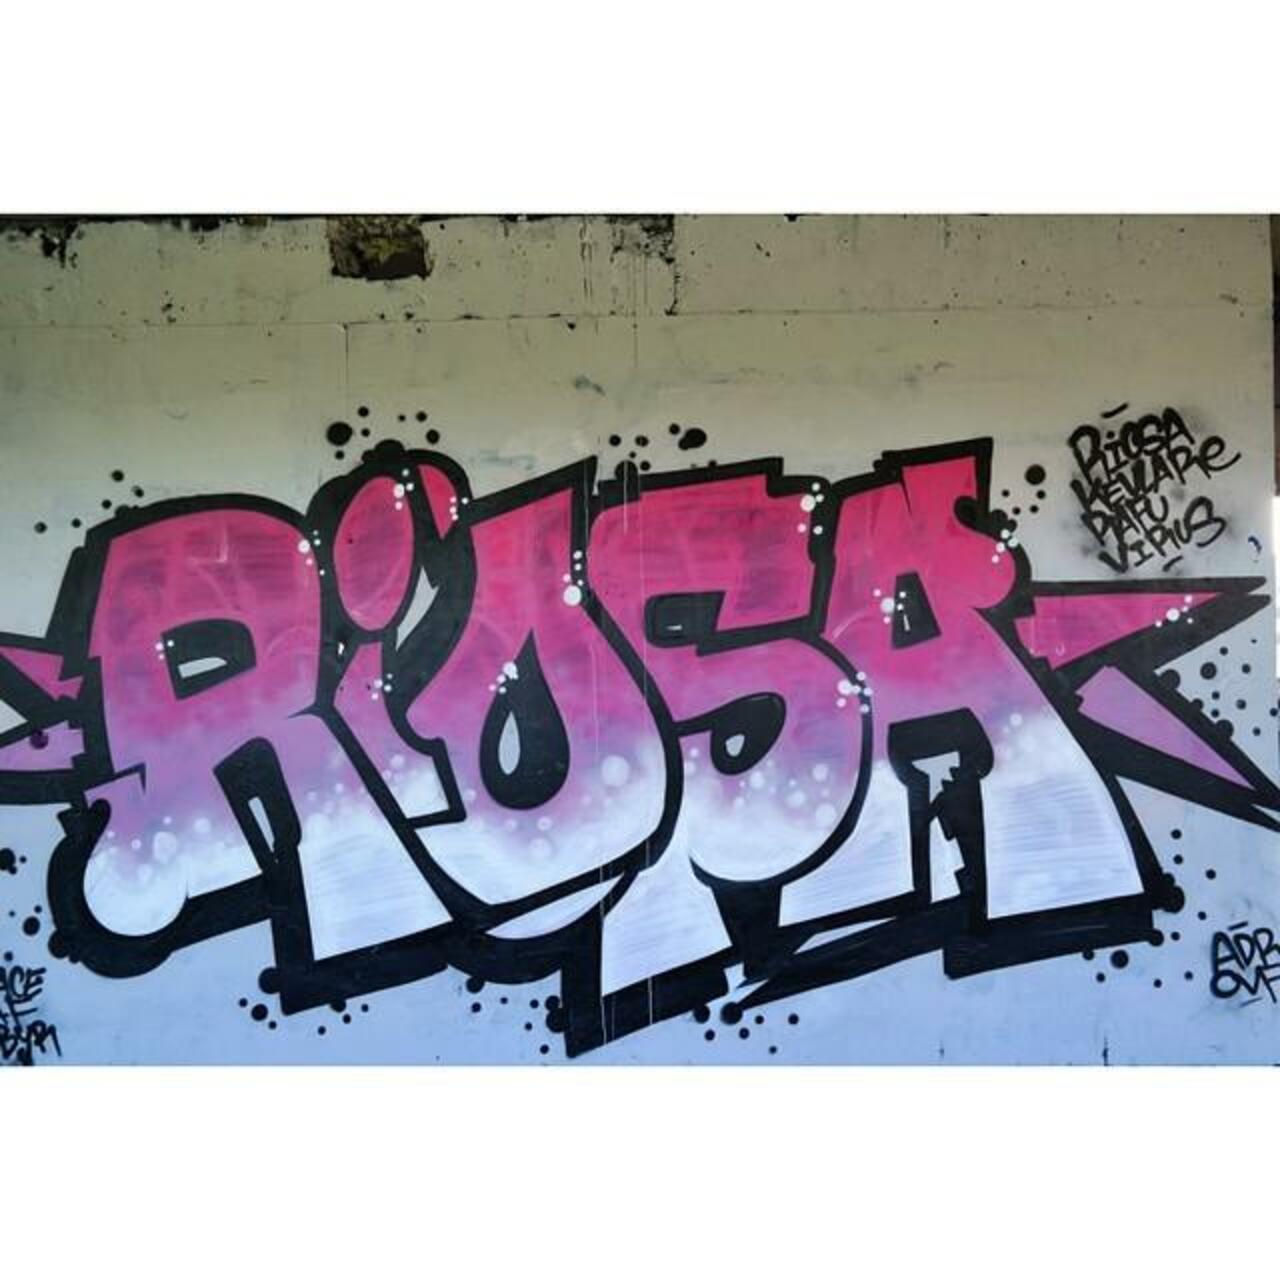 #HastaLaVista #Street #Art #StreetArt #Graffiti #Graff #Graph #GraffitiLover #InstaGraffit… http://ift.tt/1QzE0Jb http://t.co/1Ae7McZdoL